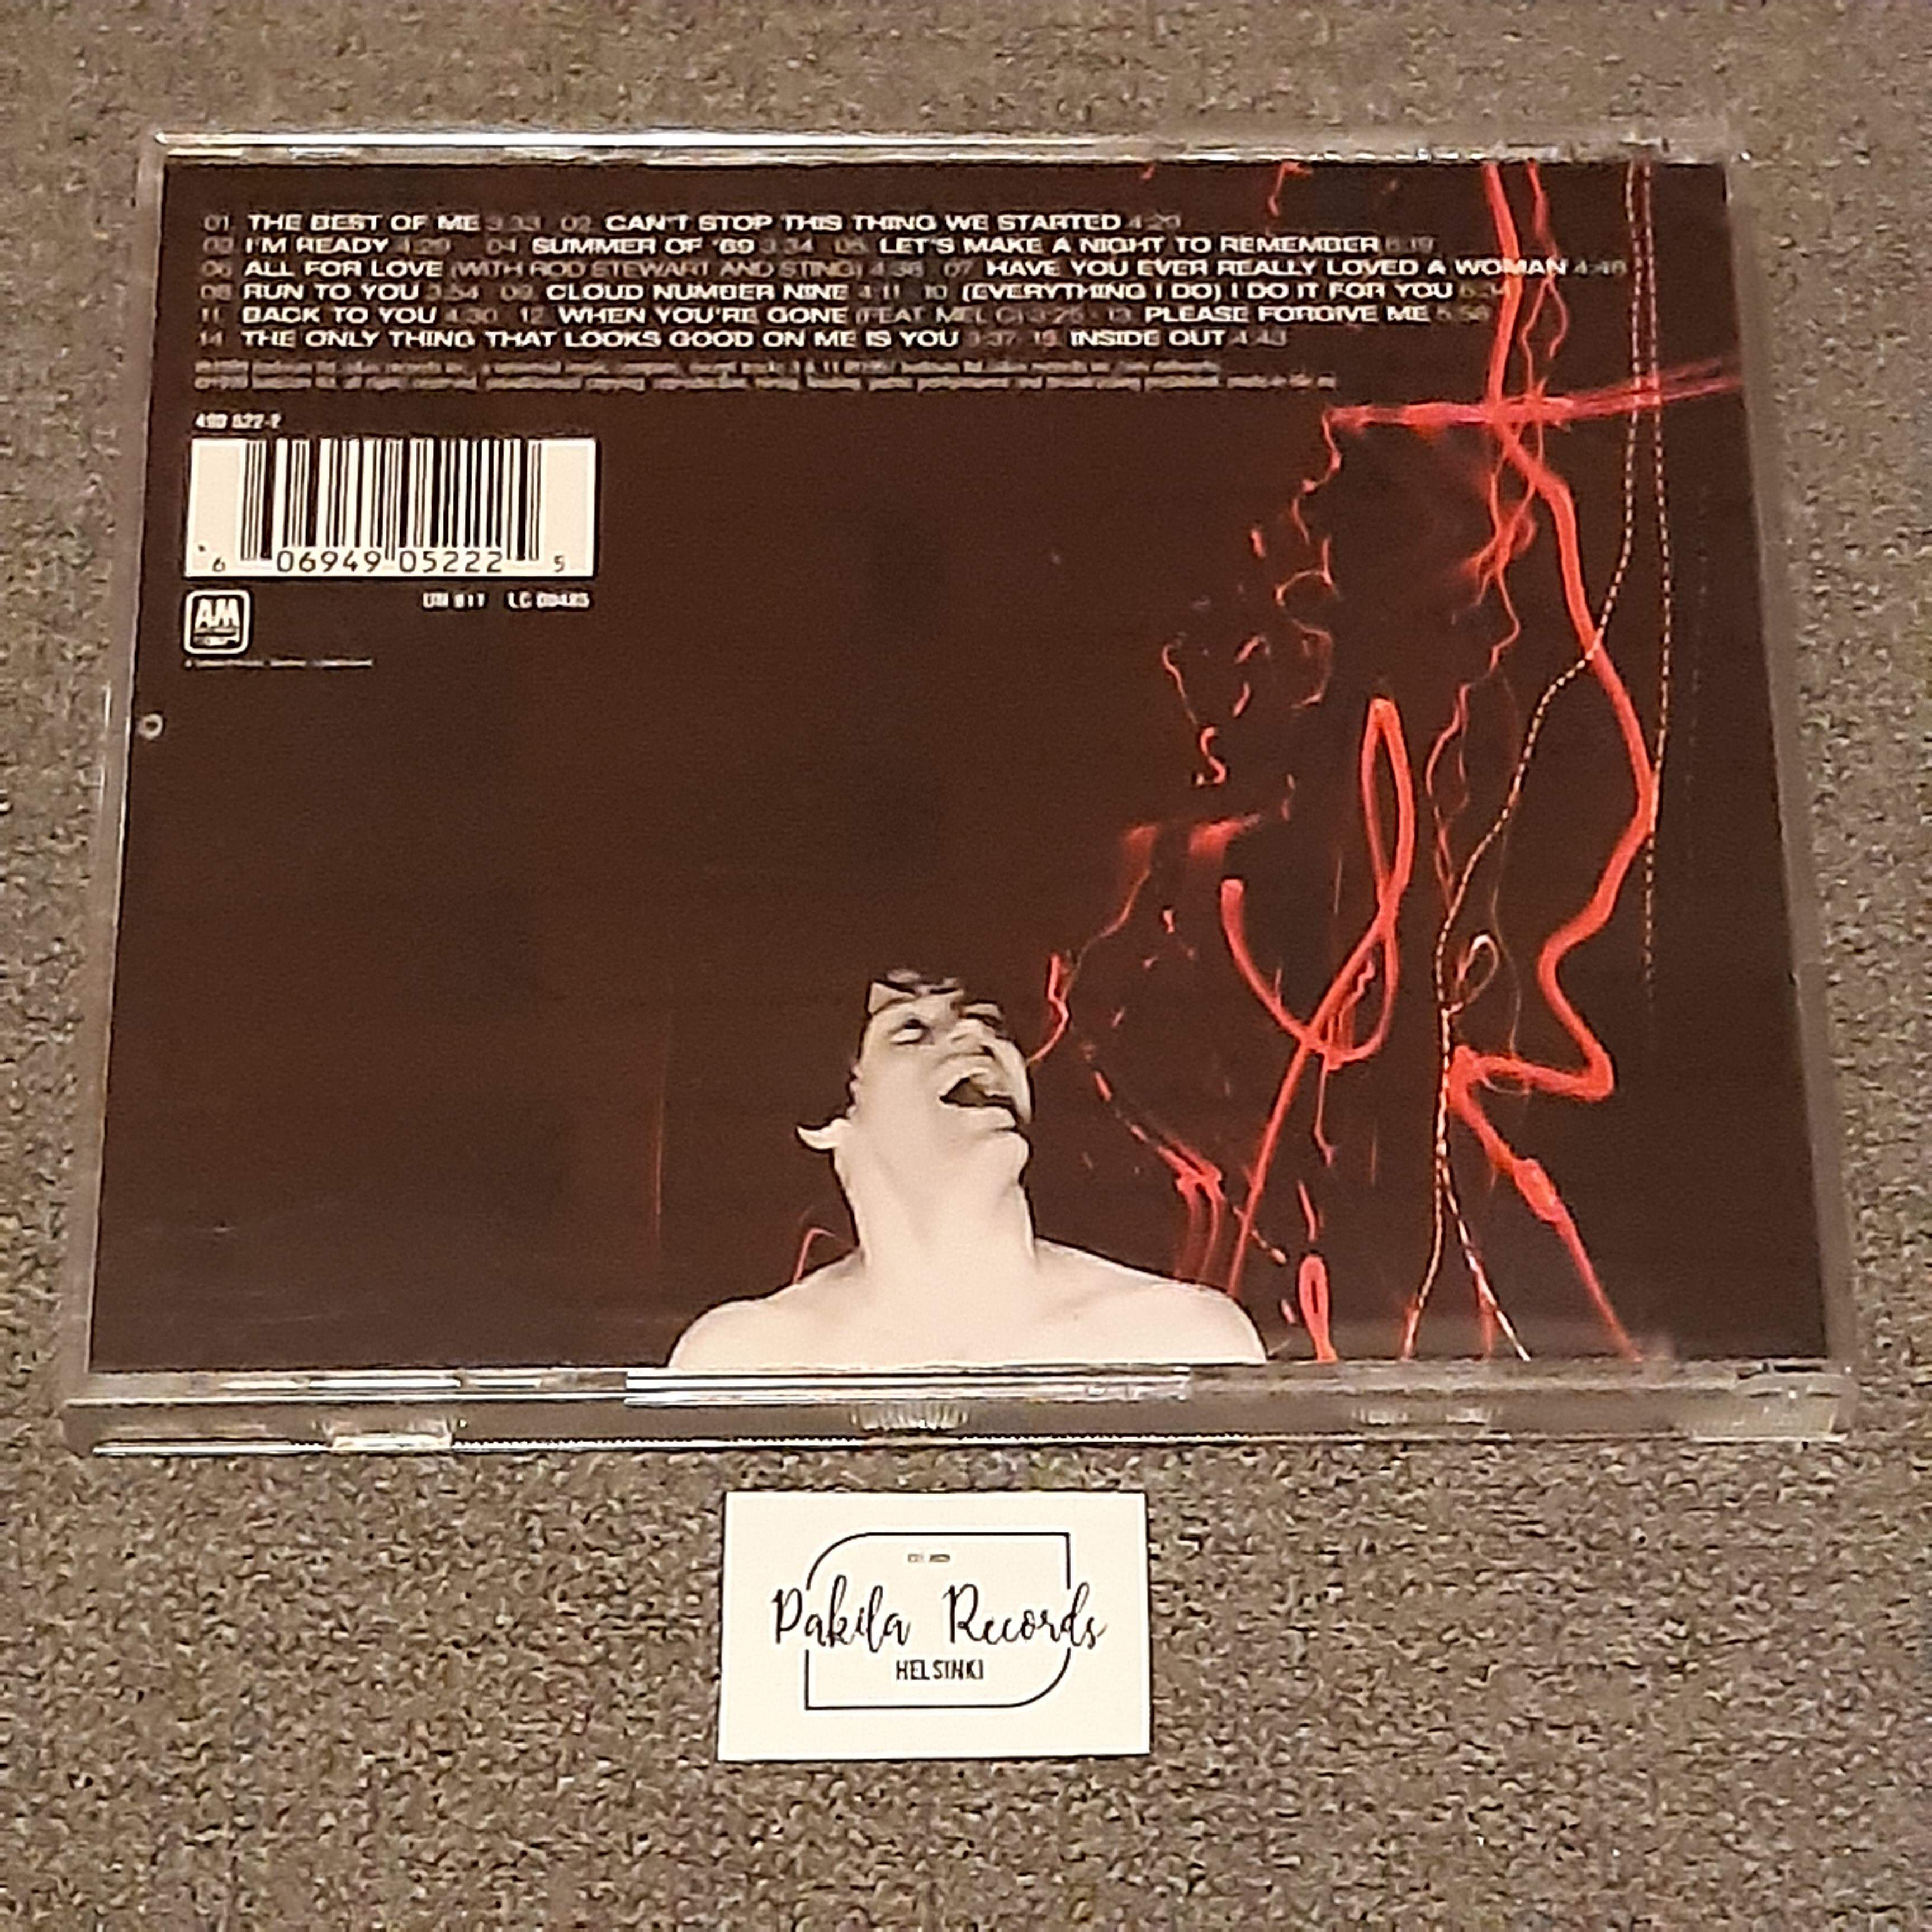 Bryan Adams - The Best Of Me - CD (käytetty)